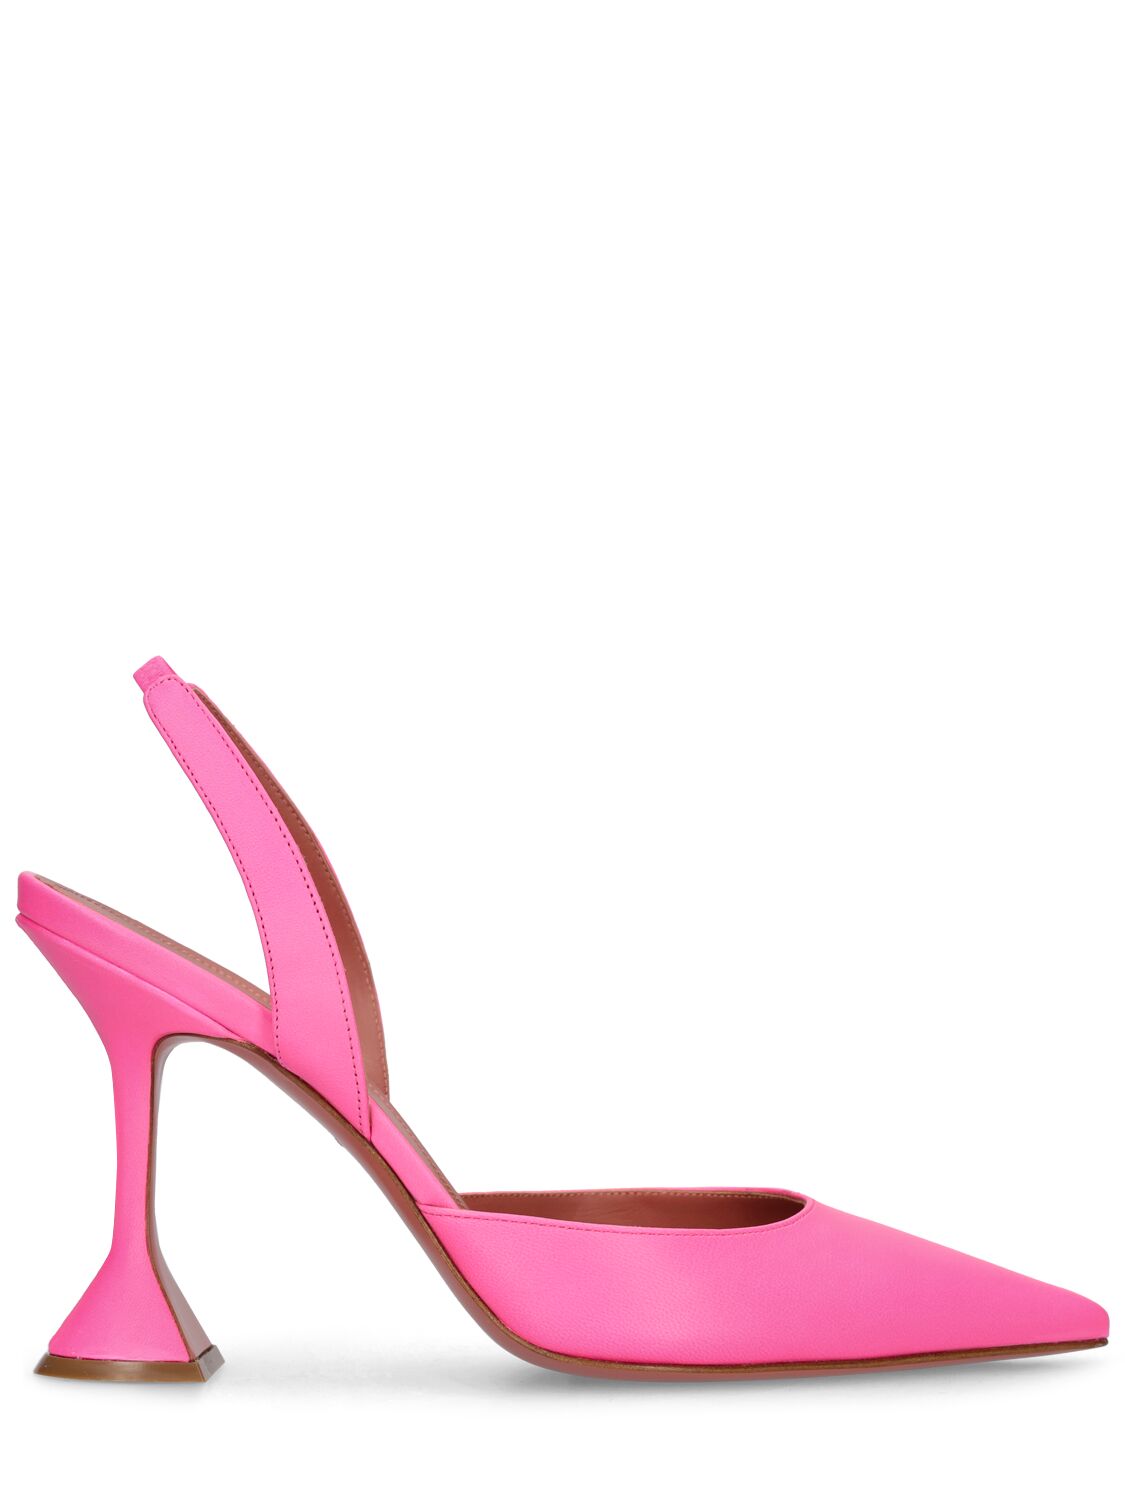 Amina Muaddi 95毫米holli皮革高跟鞋 In Hot Pink